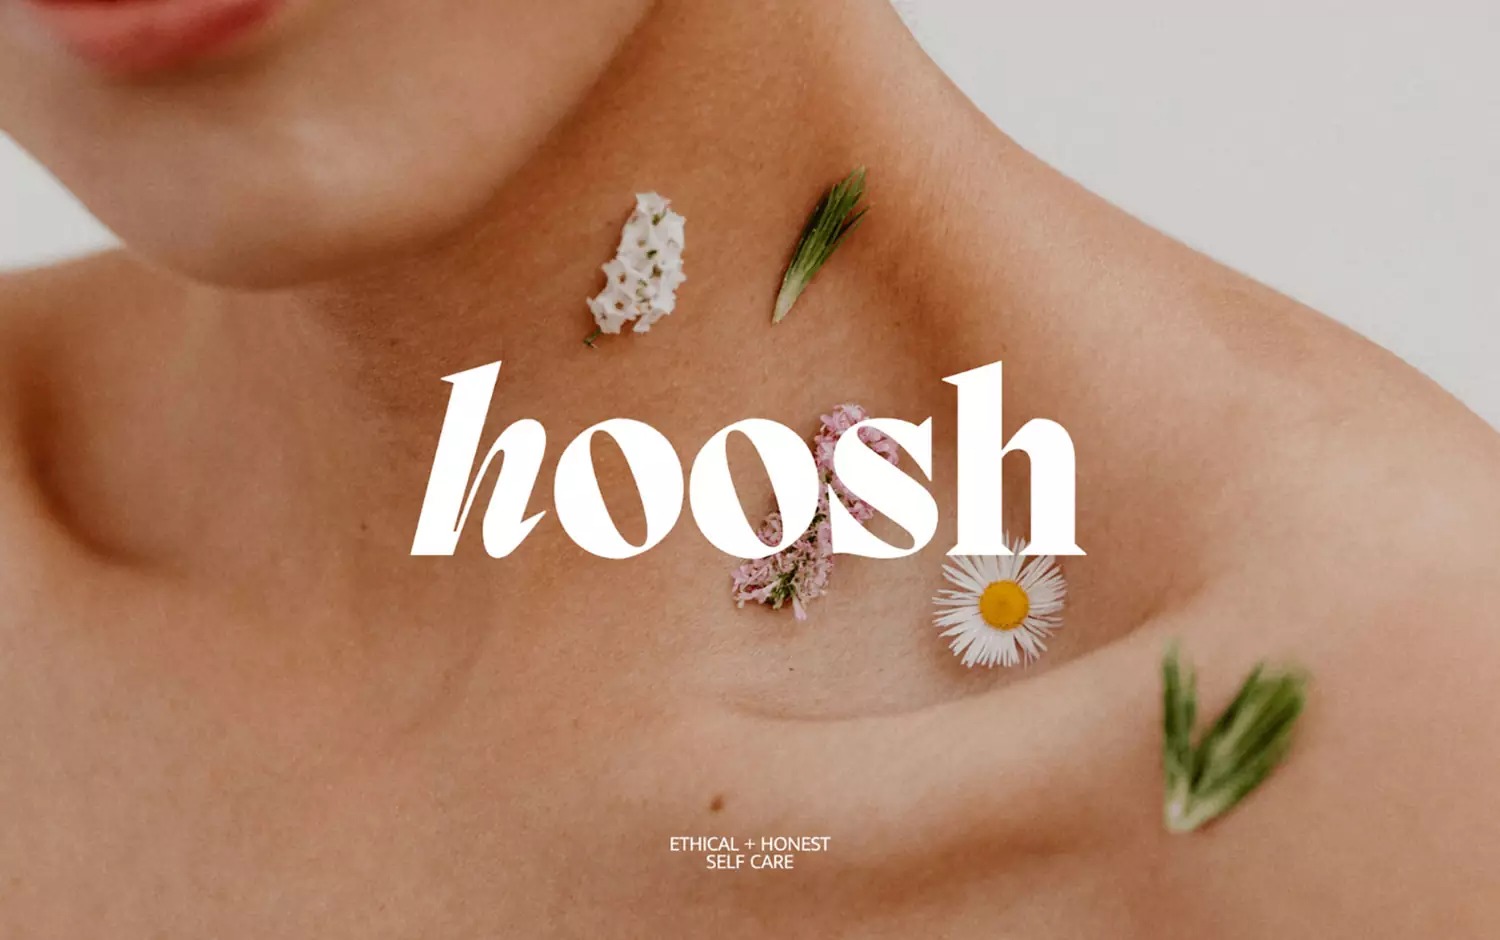 My Hoosh芳香疗法吸入器品牌设计